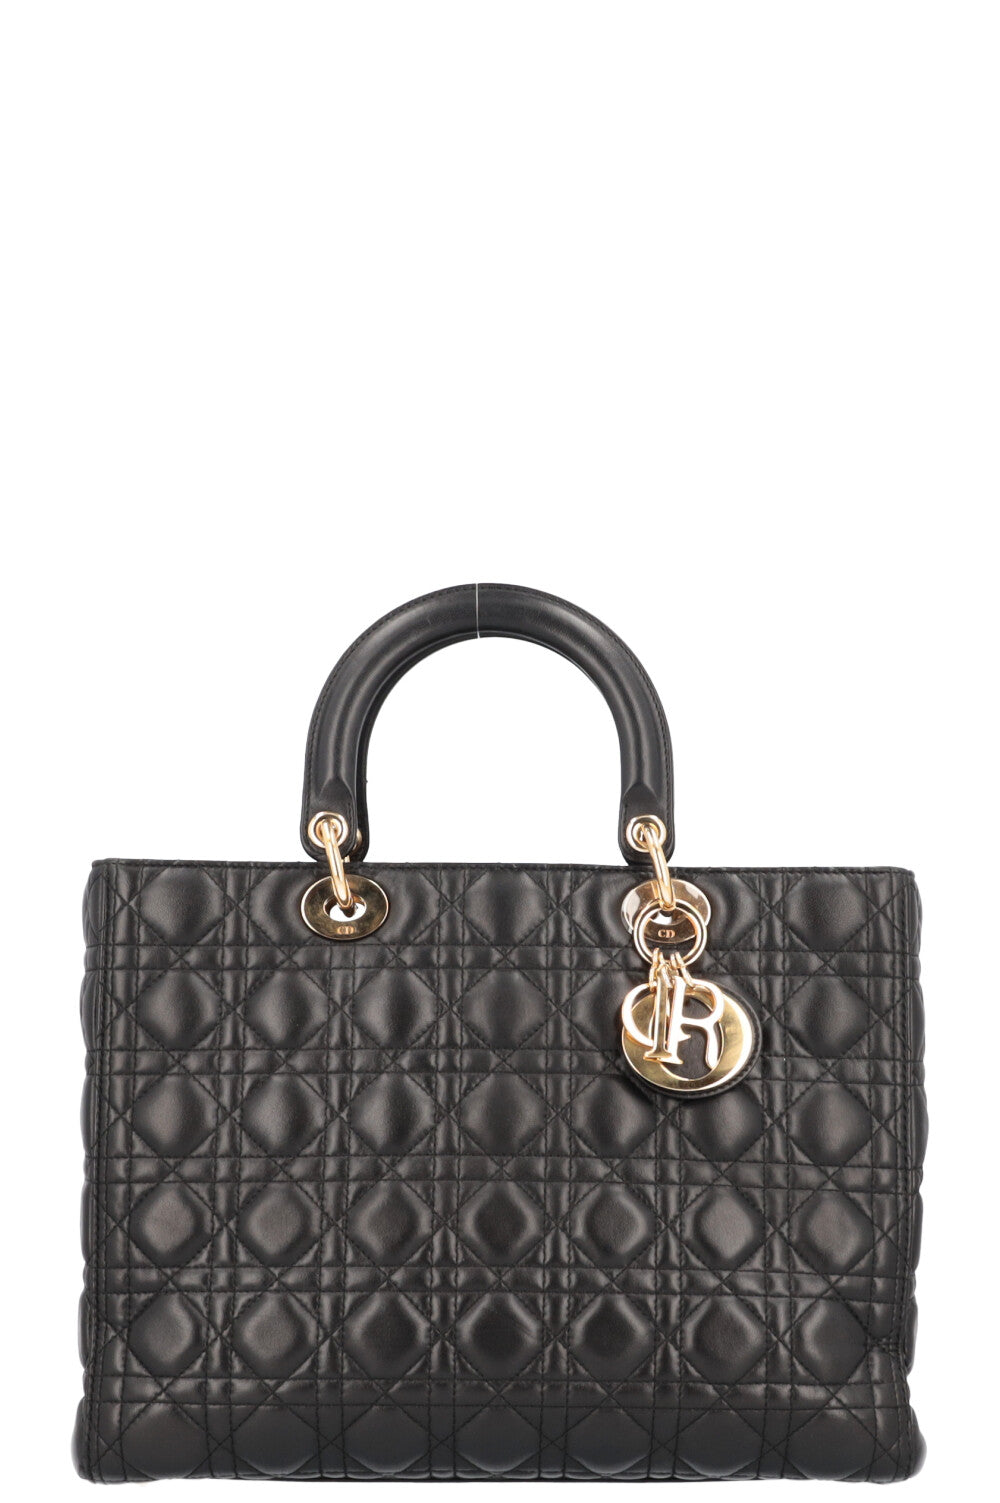 Christian Dior Lady Dior Bag Large Black Gold